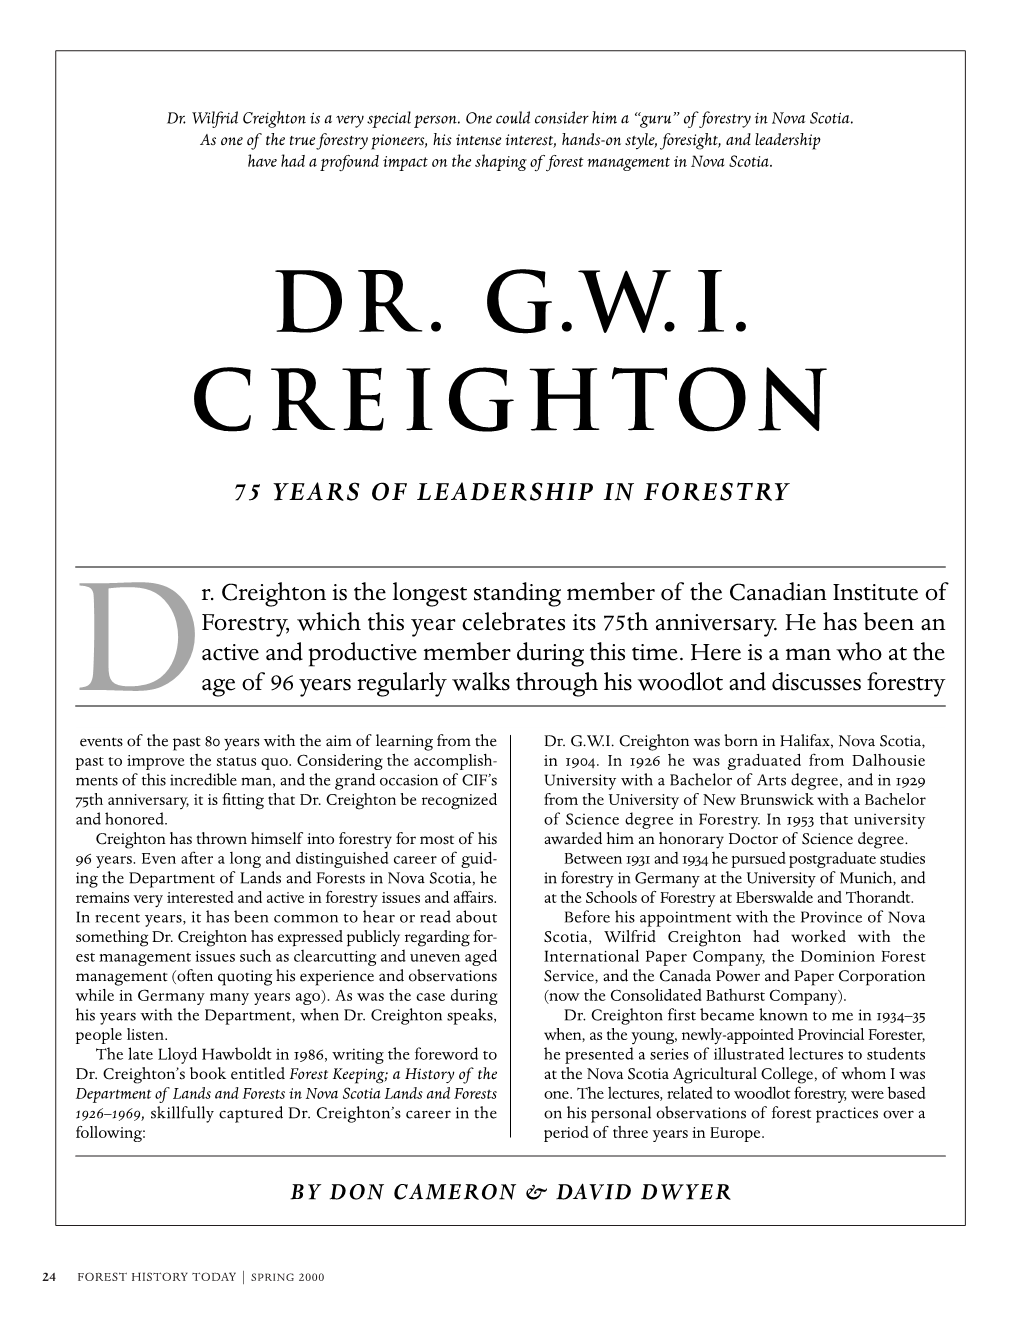 Dr. G.W.I. Creighton